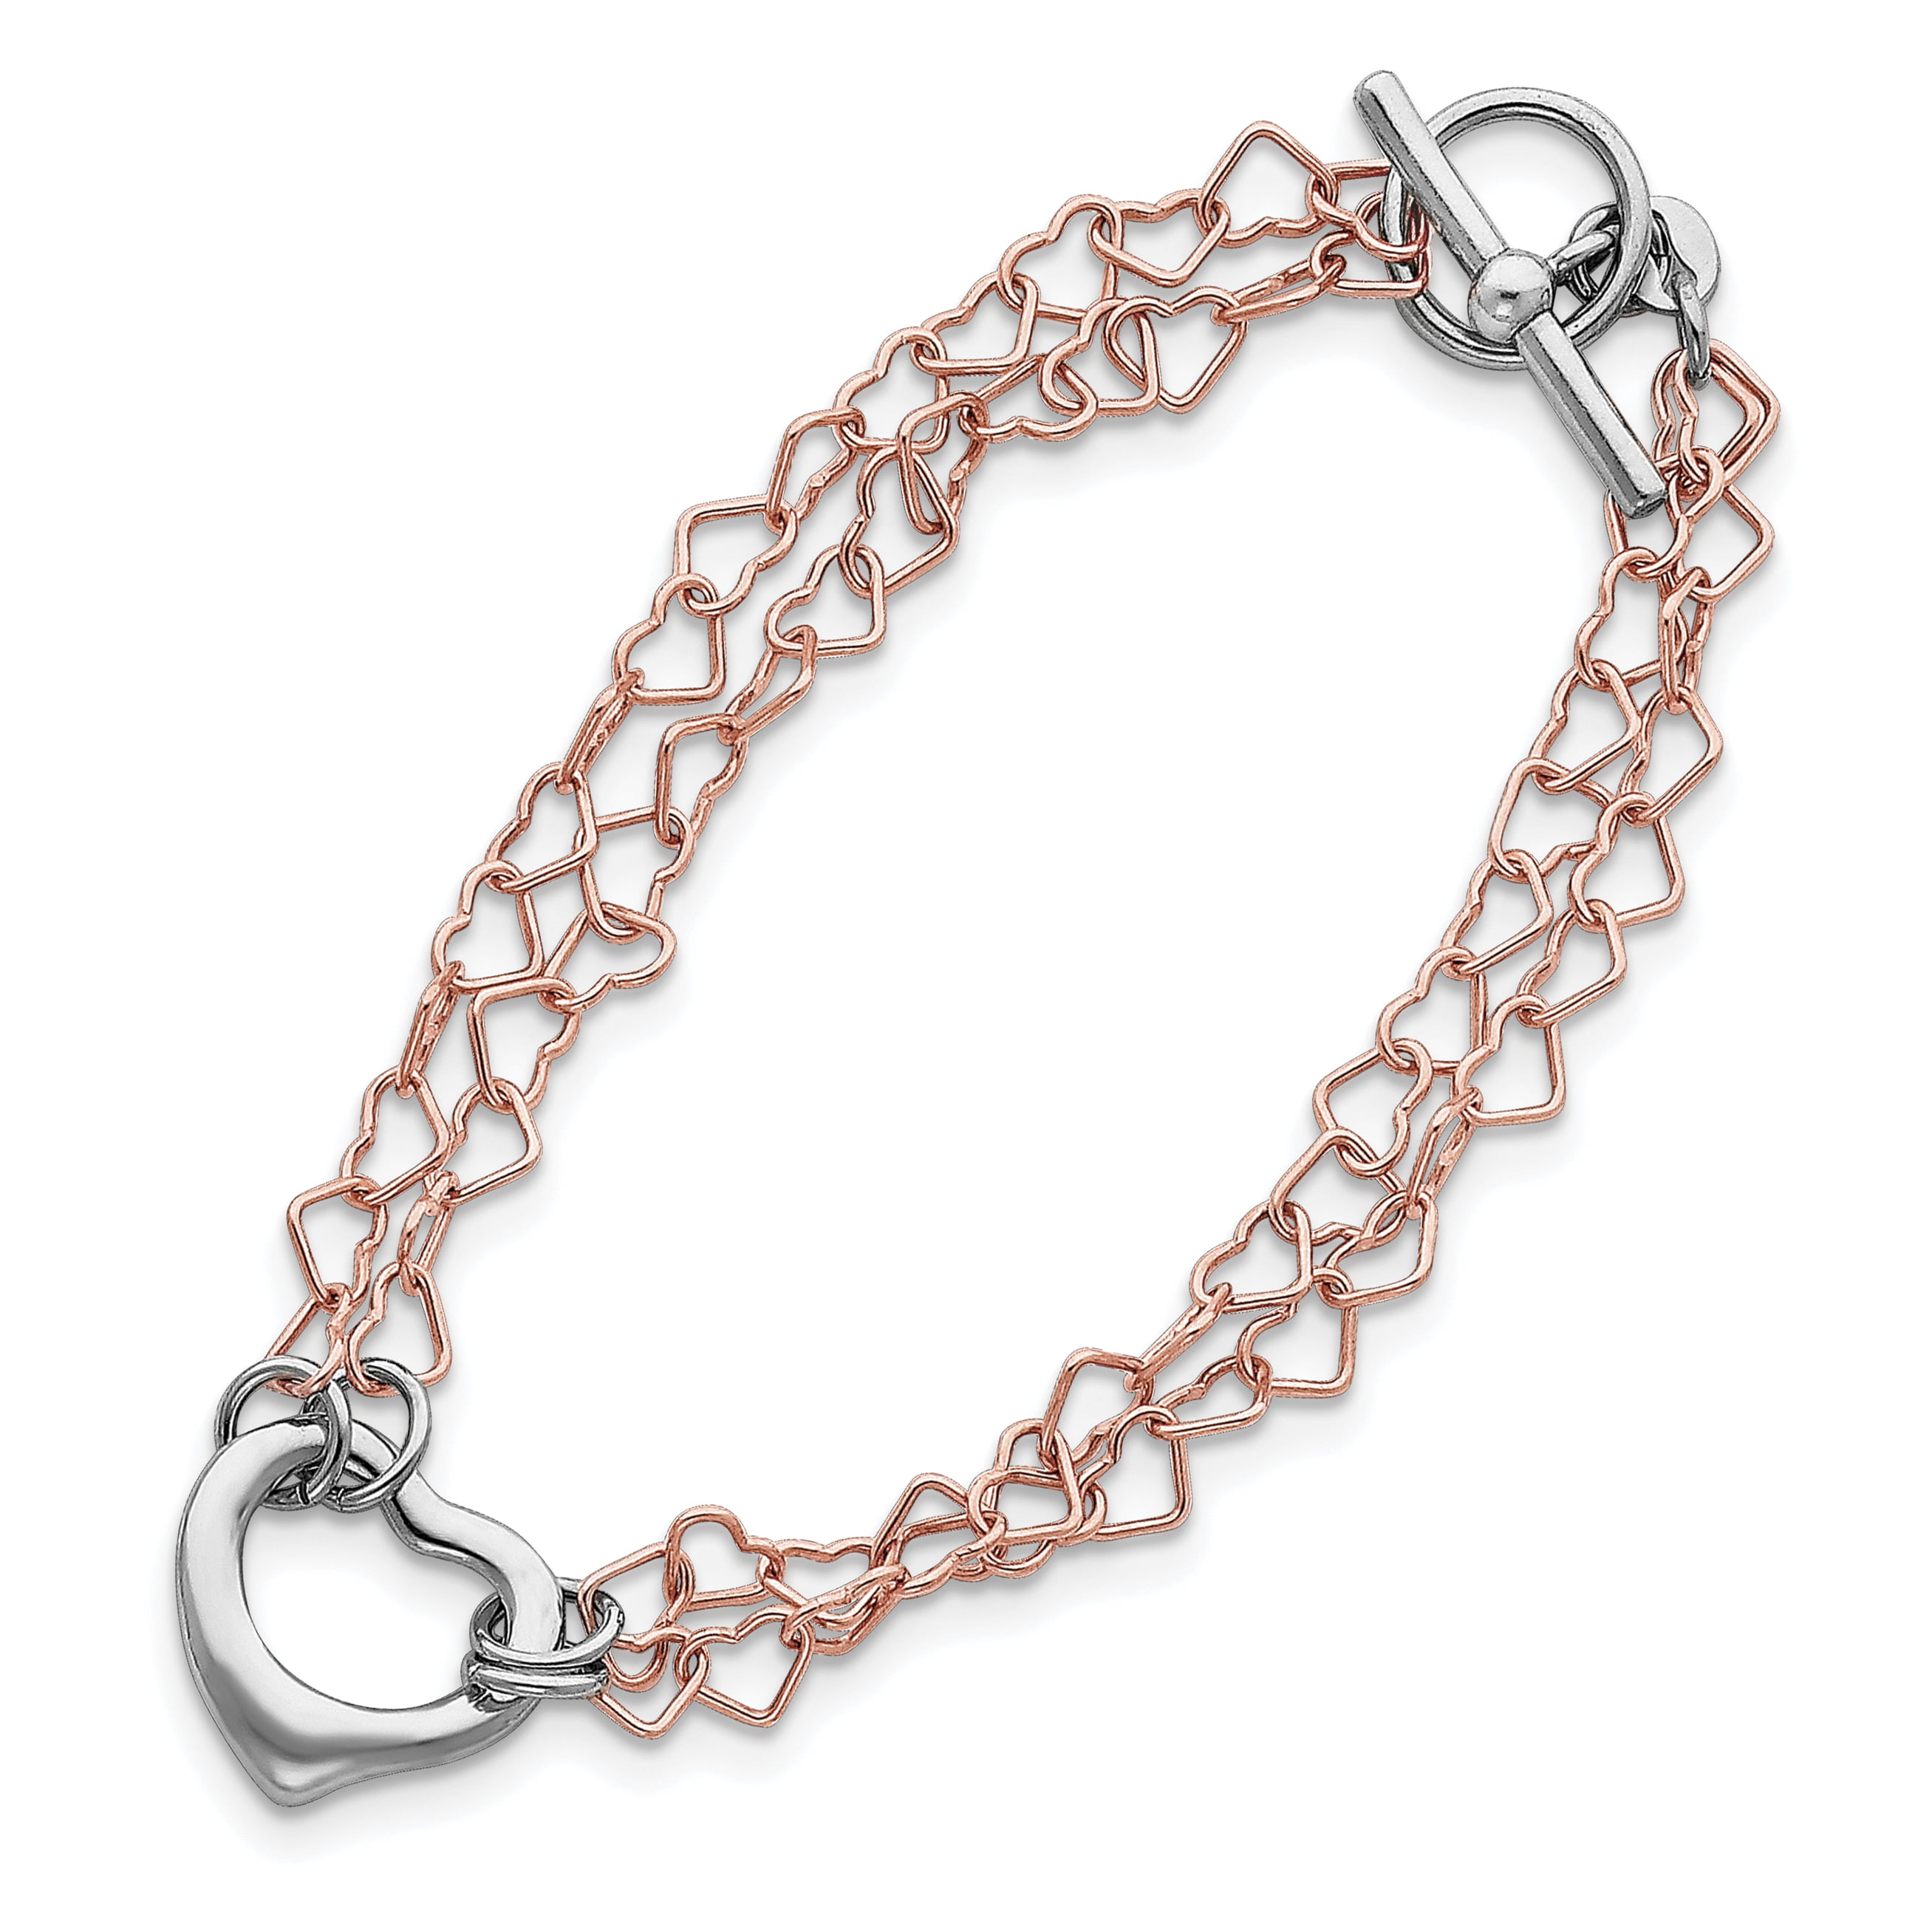 .925 Sterling Silver Polished Heart Link Bracelet 7.25 inches 